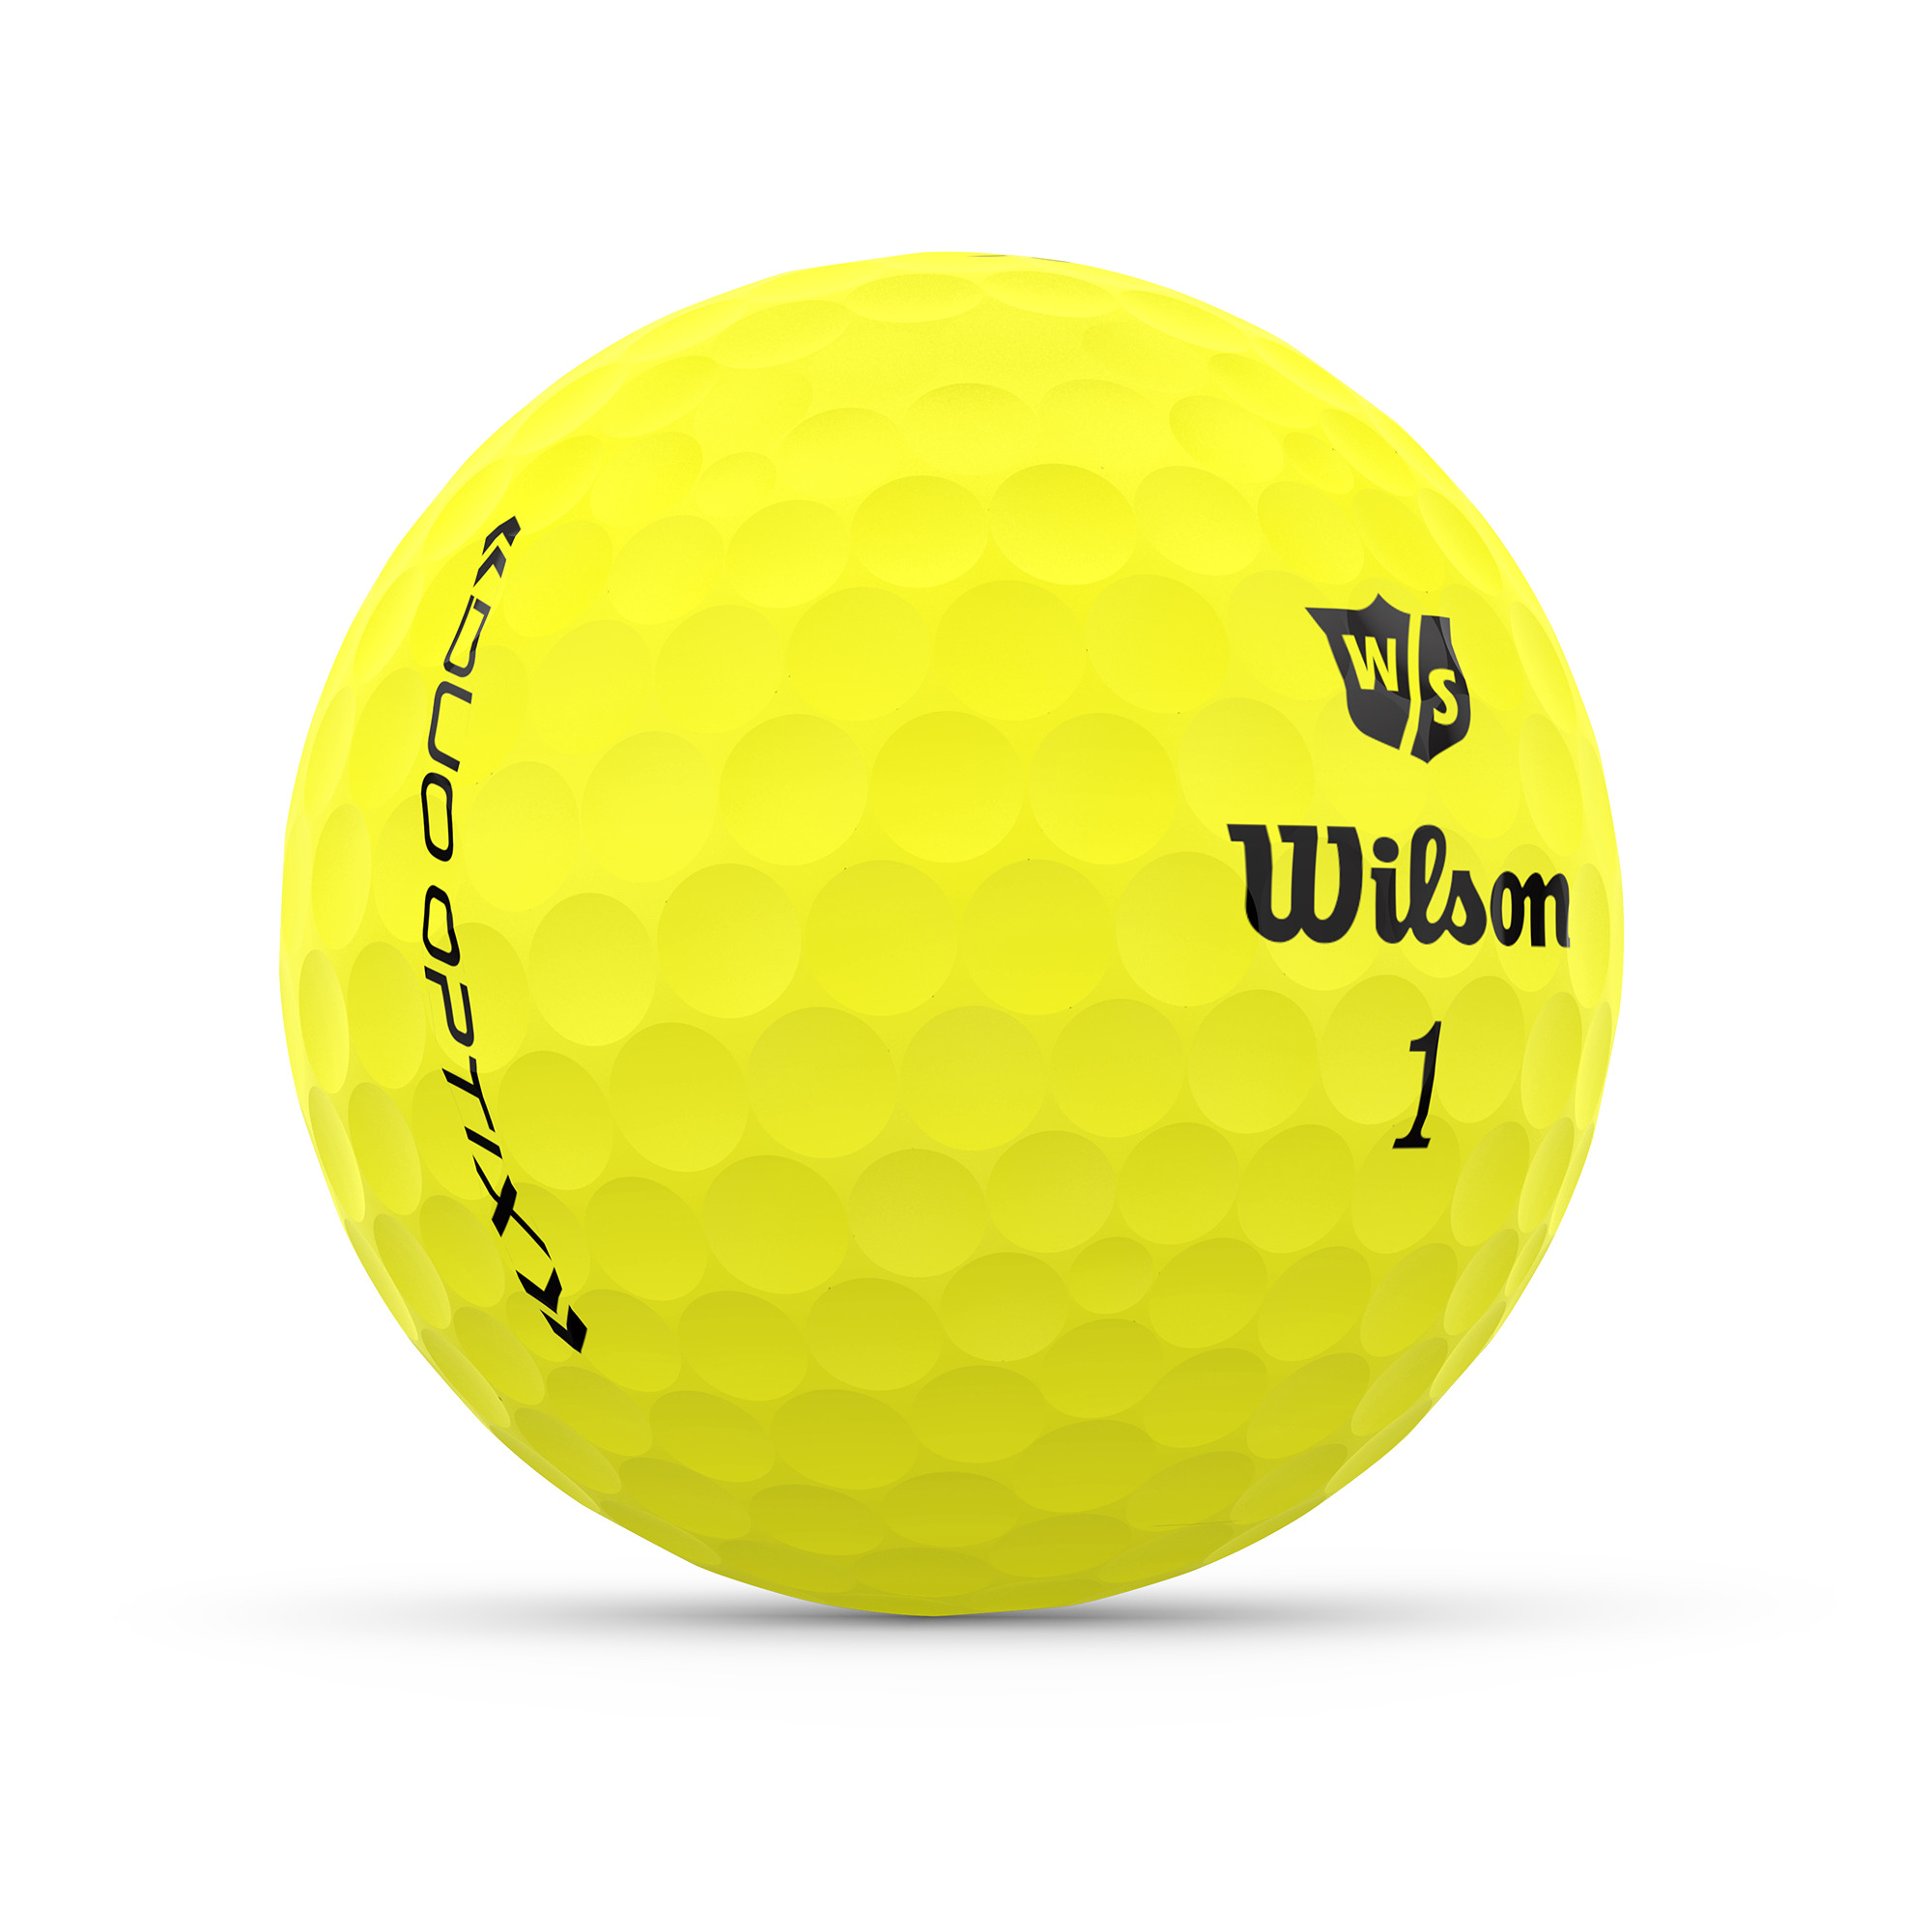 Wilson launches DUO Soft + and DUO Optix balls